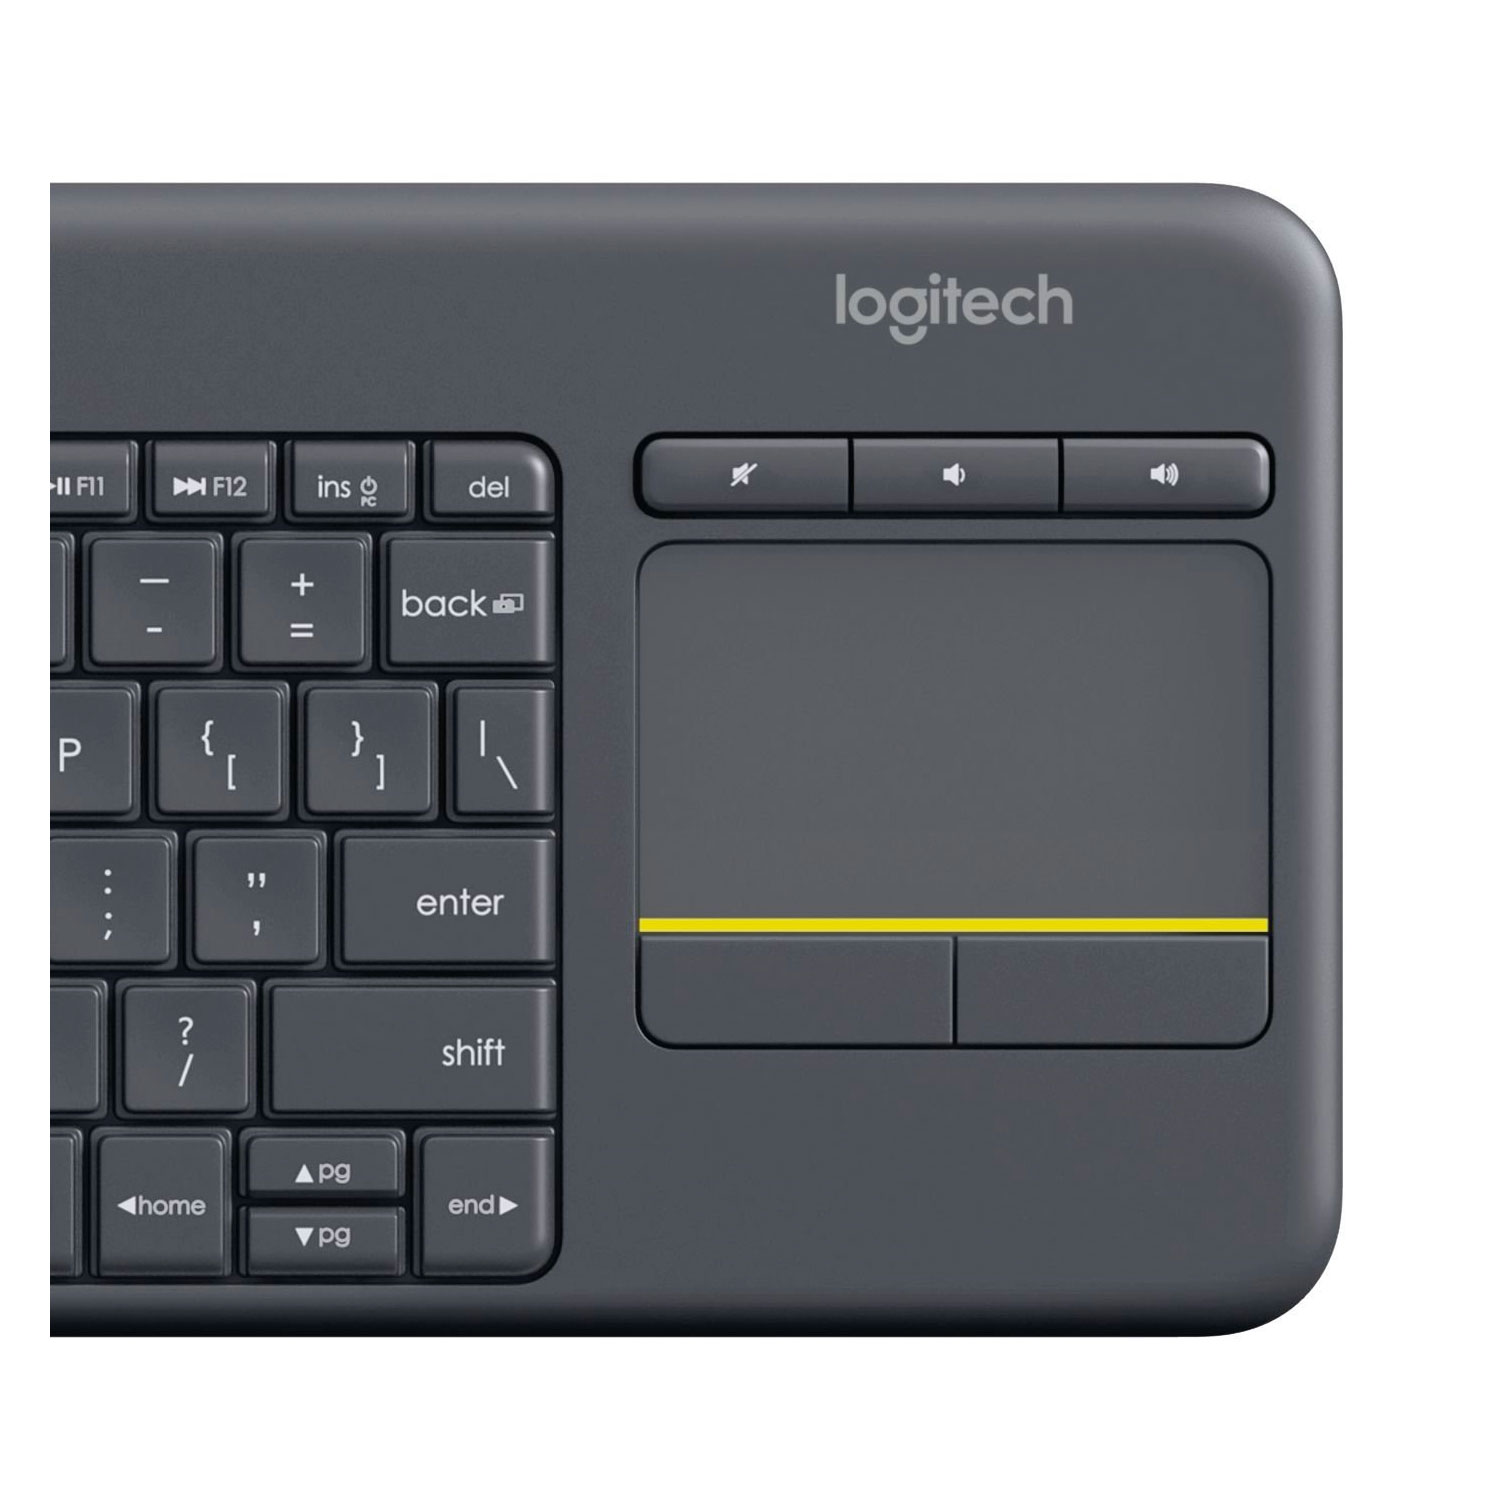 Teclado Logitech K400 Plus Touchpad Wireless - Preto (920-007123)